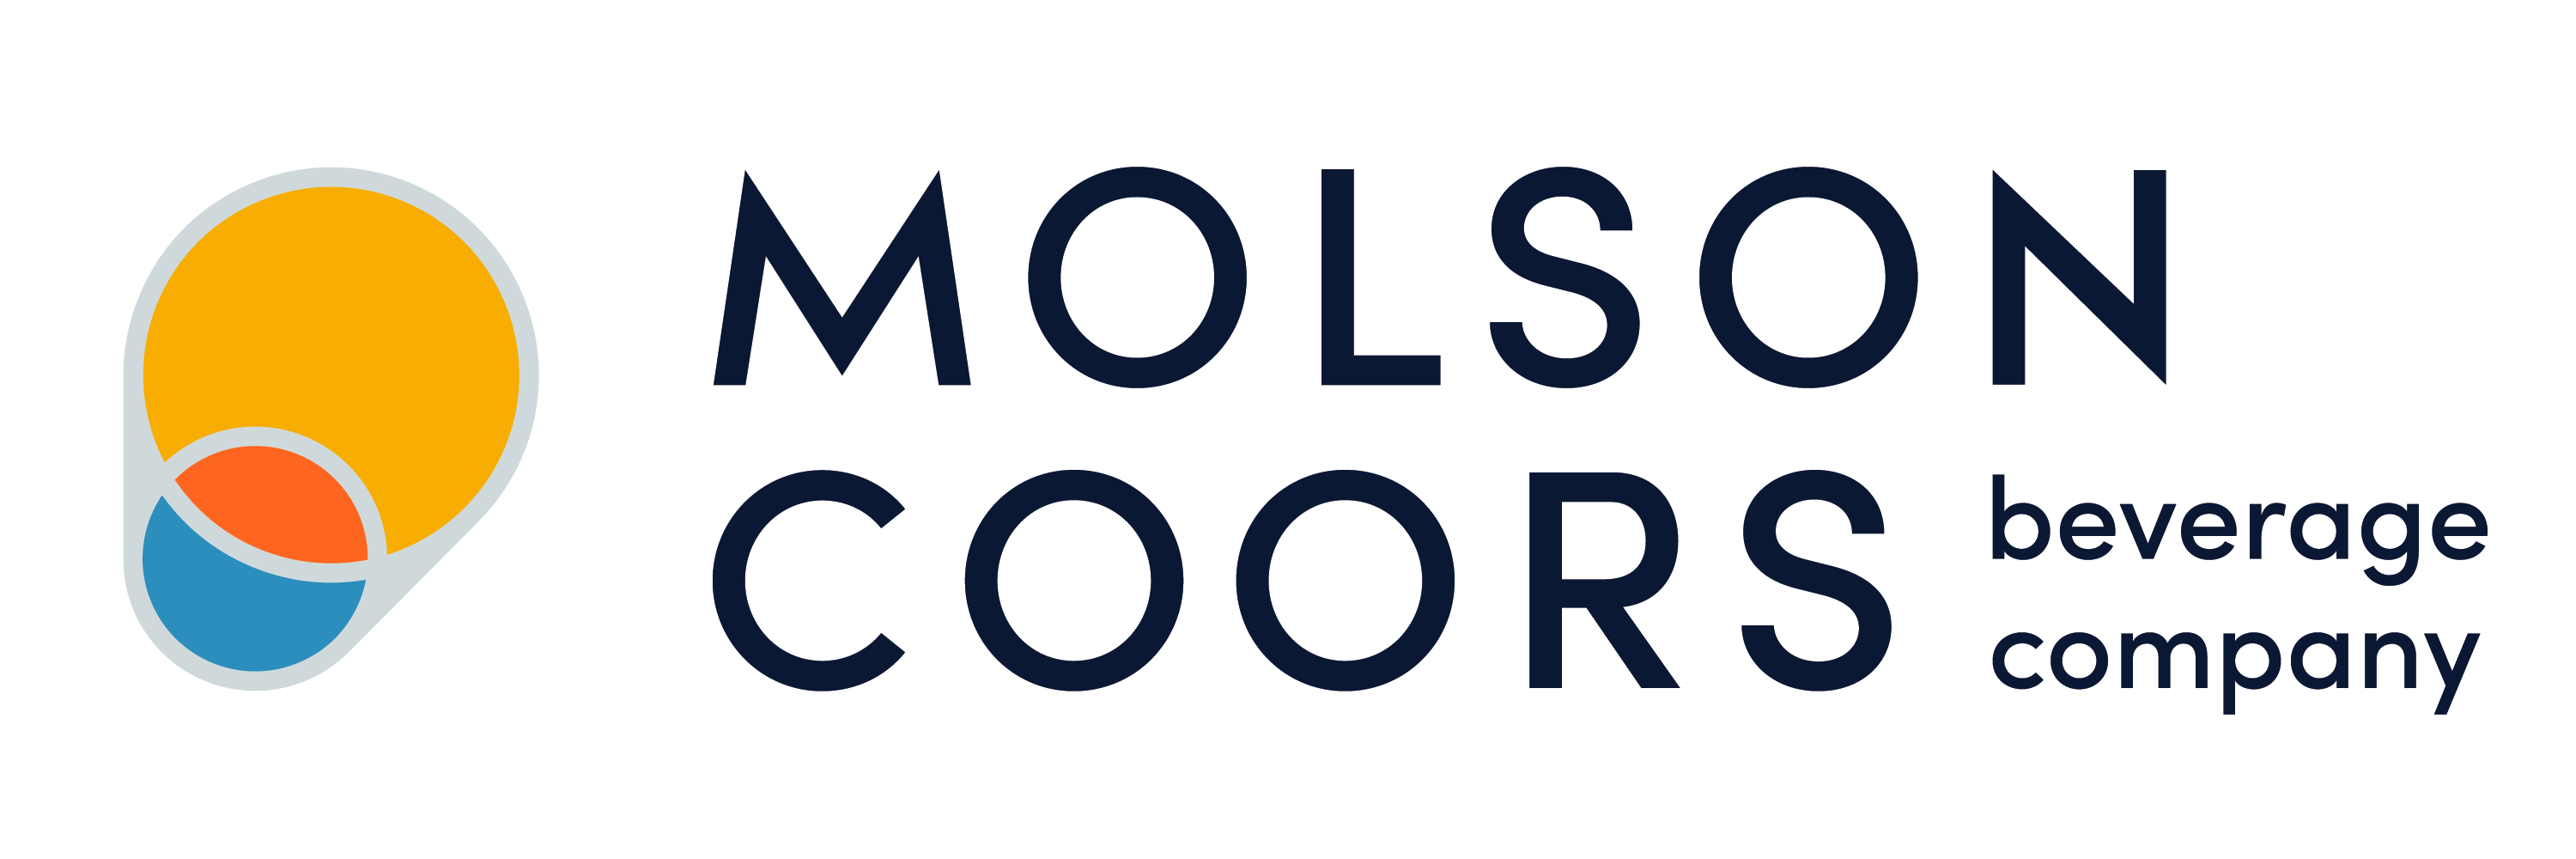 Molson Coors